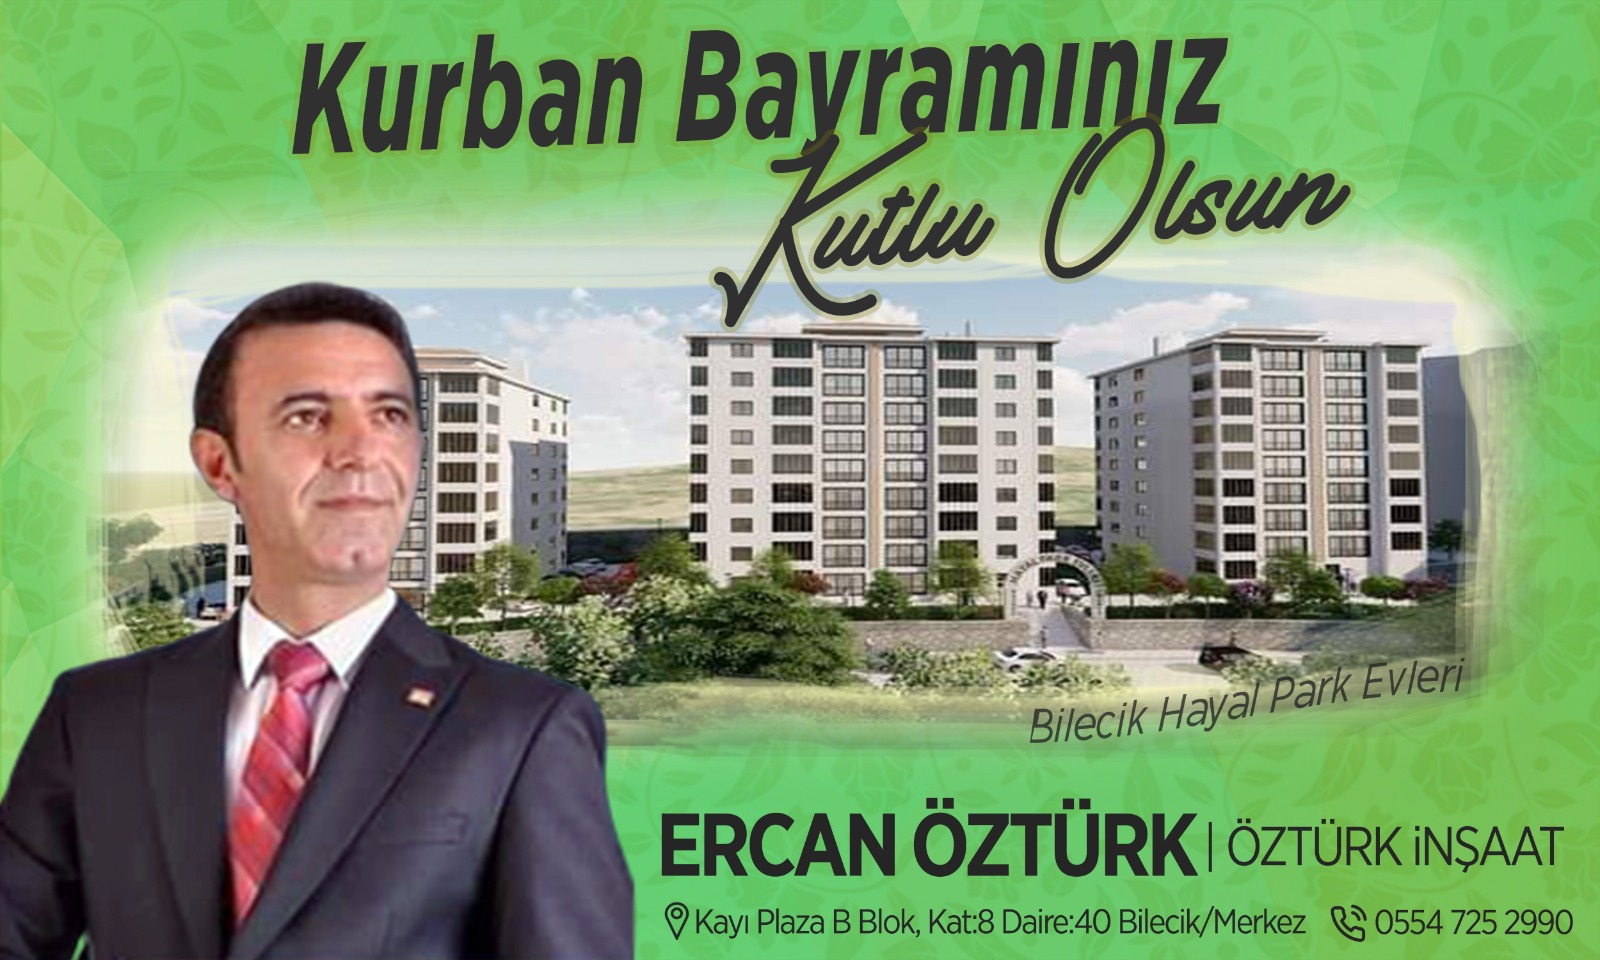 ozturk-insaat-ercan-ozturk8217un-kurban-bayrami-mesaji.png